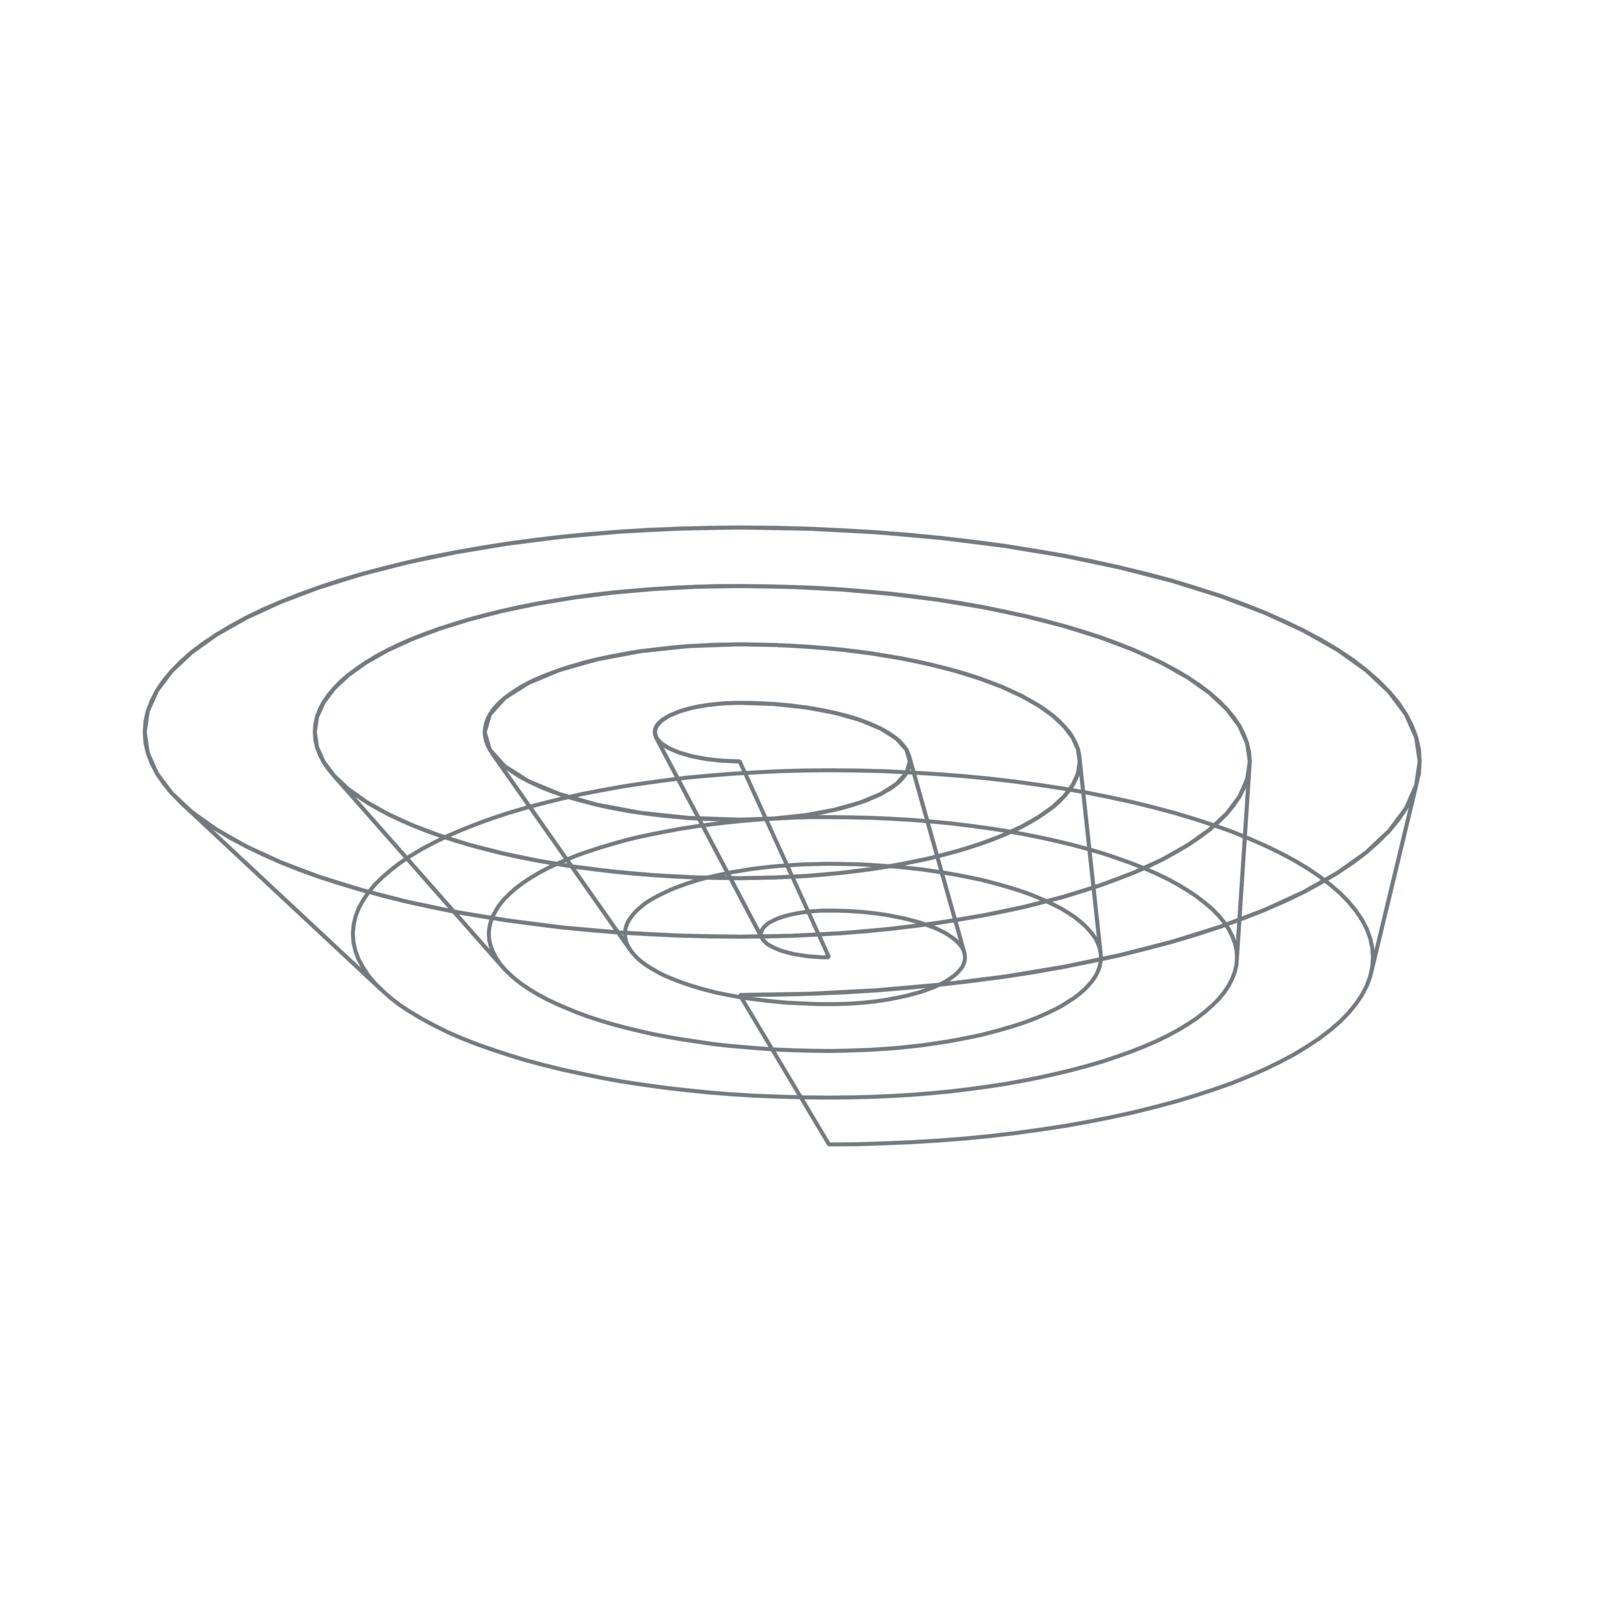 Wireframe spiral object by shawlinmohd